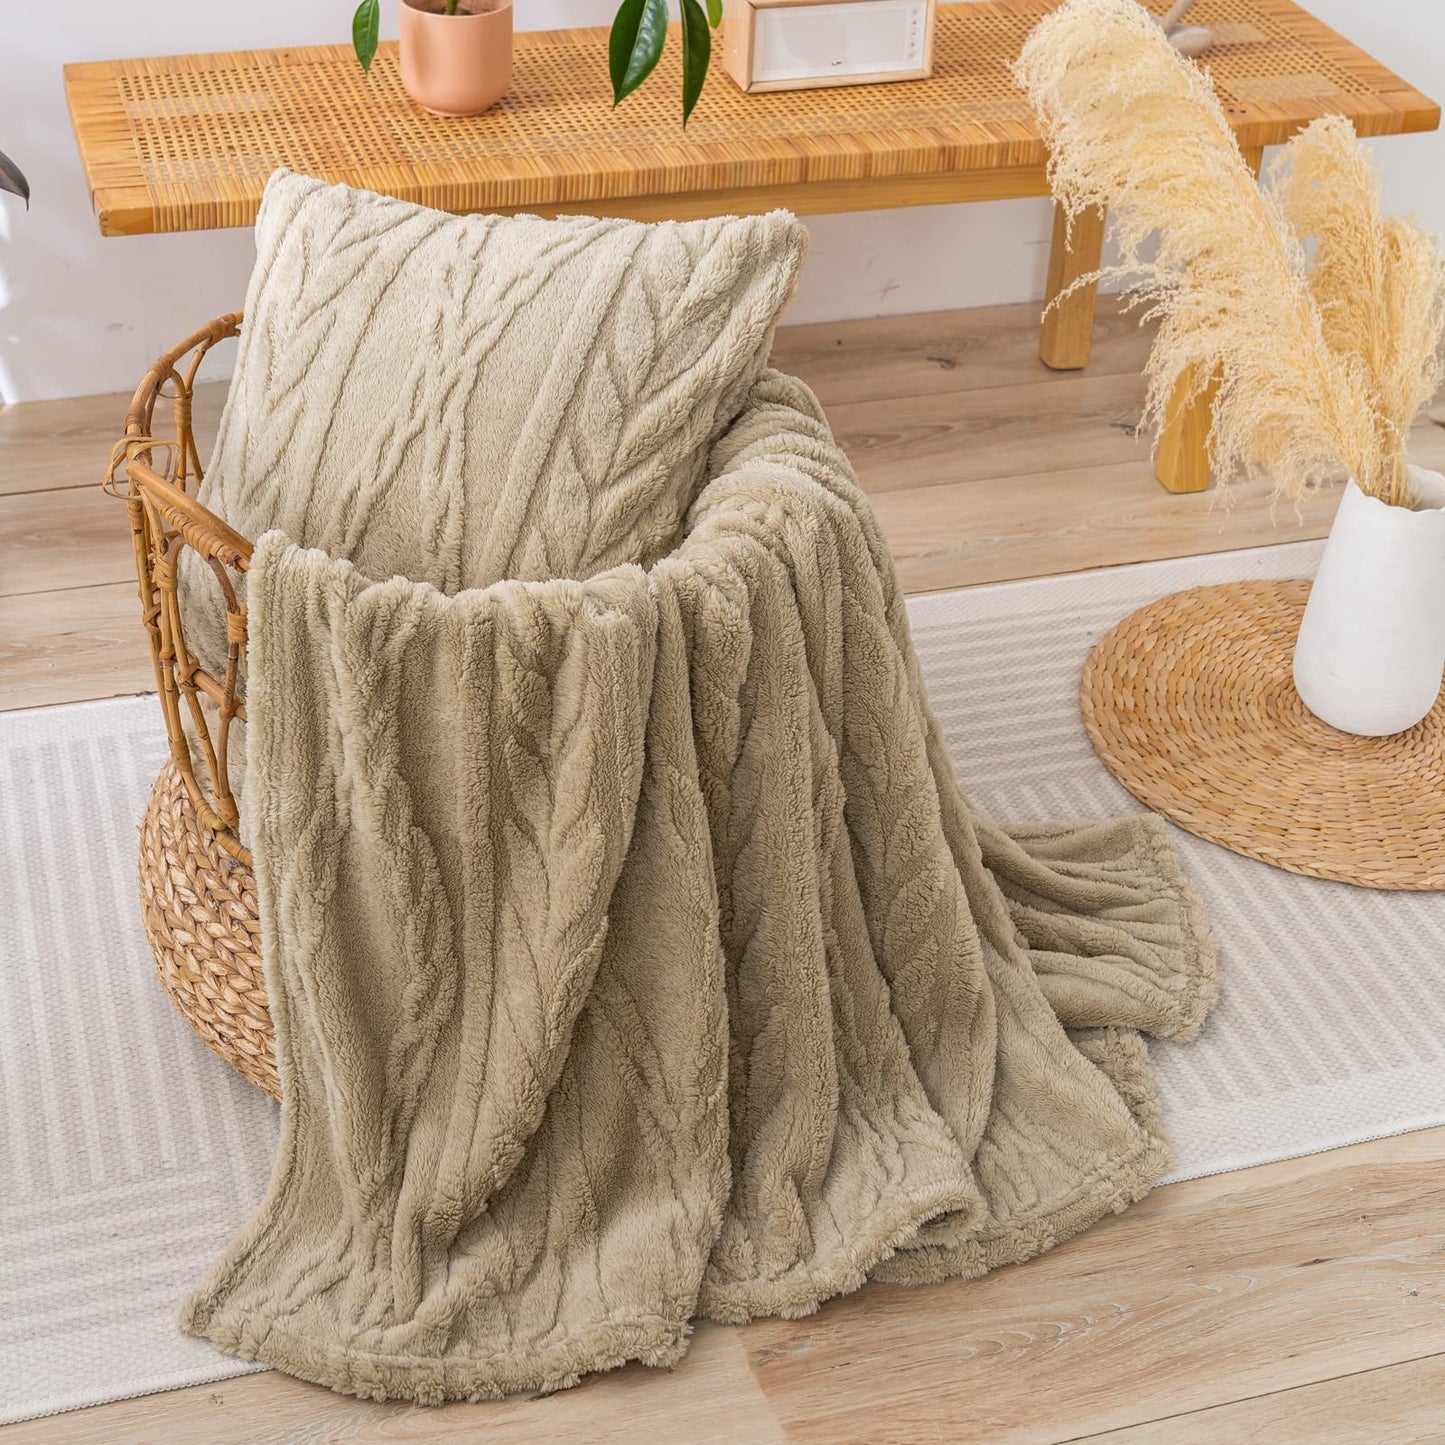 YUSOKI Sherpa Throw Blanket-3D Stylish Design Super Soft Fuzzy Cozy Warm Blanket Thick Plush Fluffy Furry Blankets for Teen Girls Women Couch Bed Sofa Chair Men Boys Gift(Tan,50"x65")